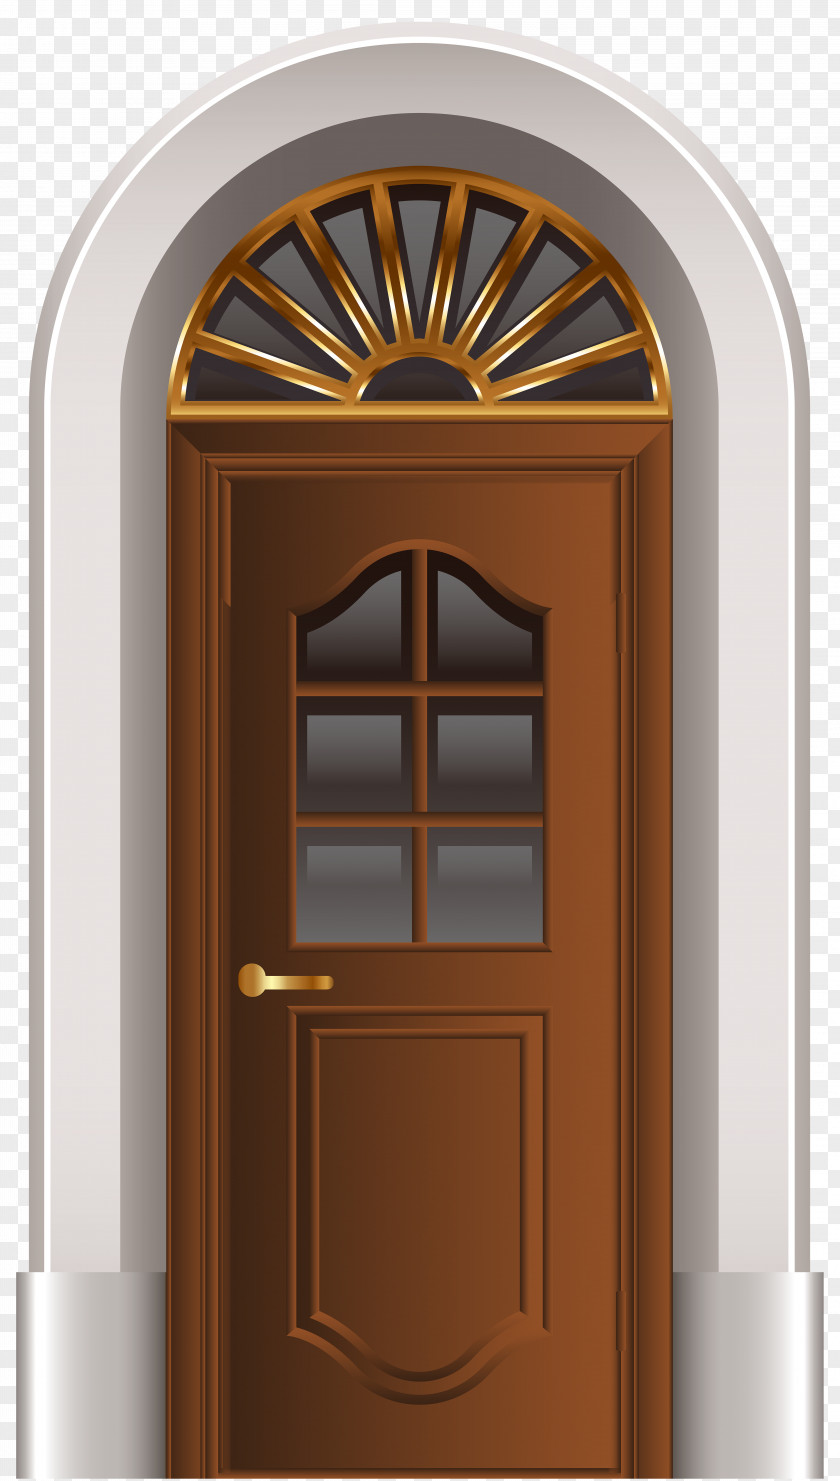 Exterior White Columns Clip Art Door Image House Interior Design Services PNG